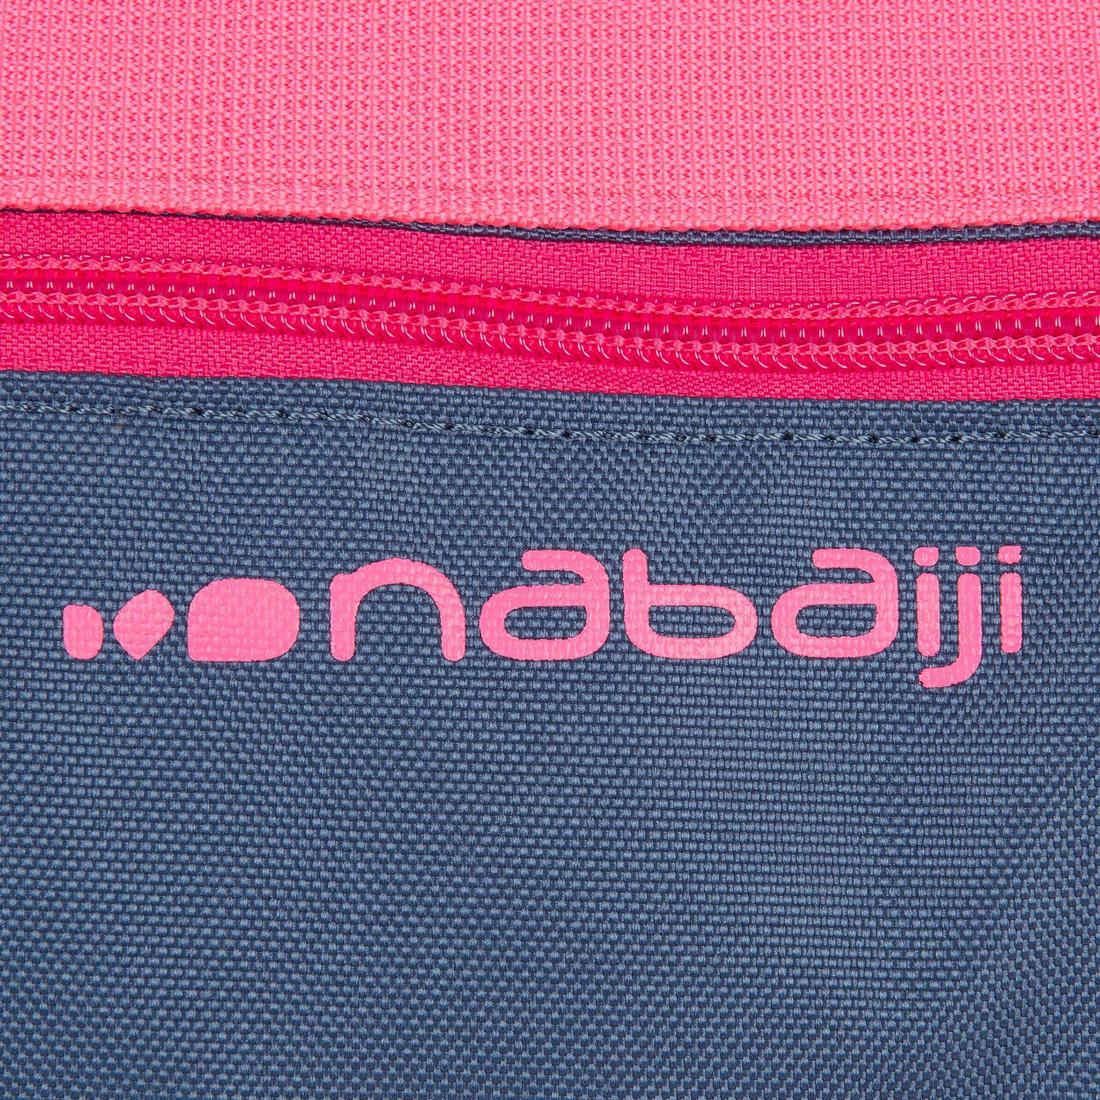 NABAIJI(ナバイジ) 水泳・プール バッグ 20L